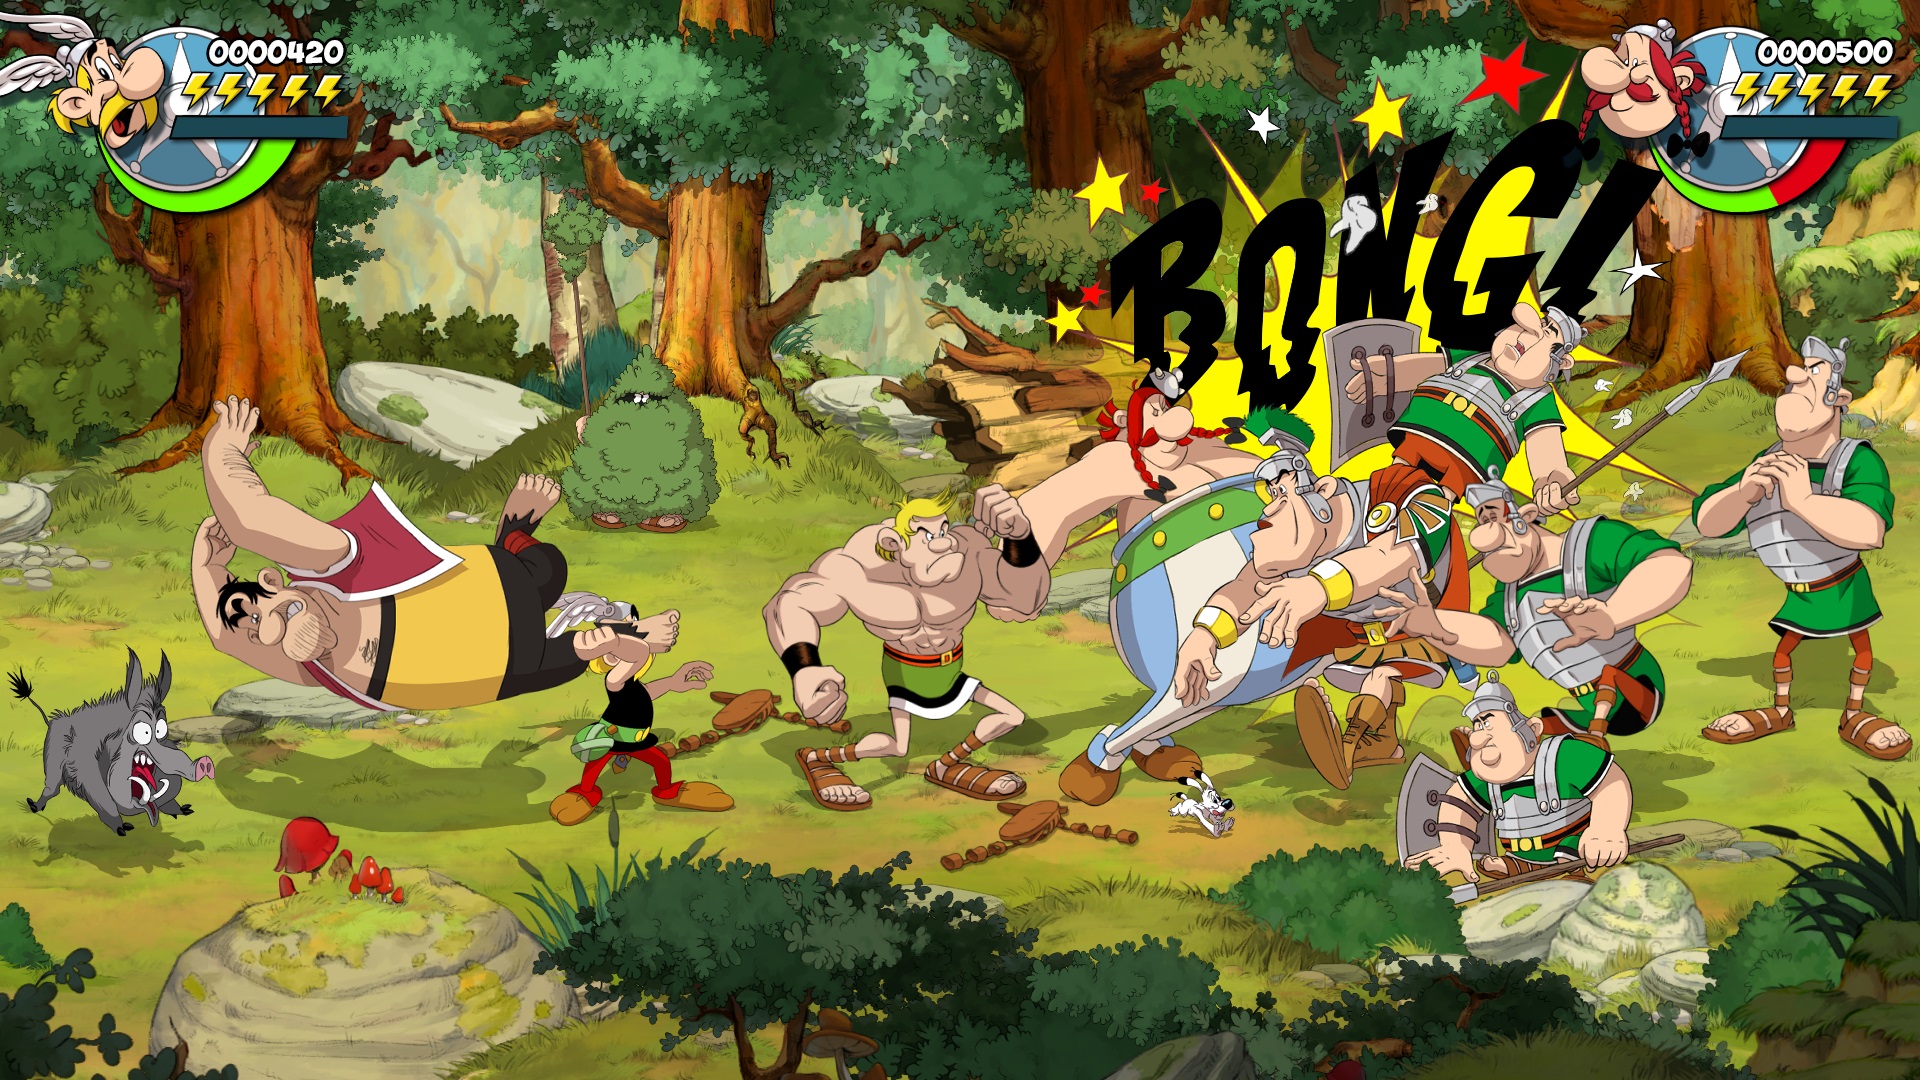 Asterix & Obelix: Slap them All! - Limited Edition